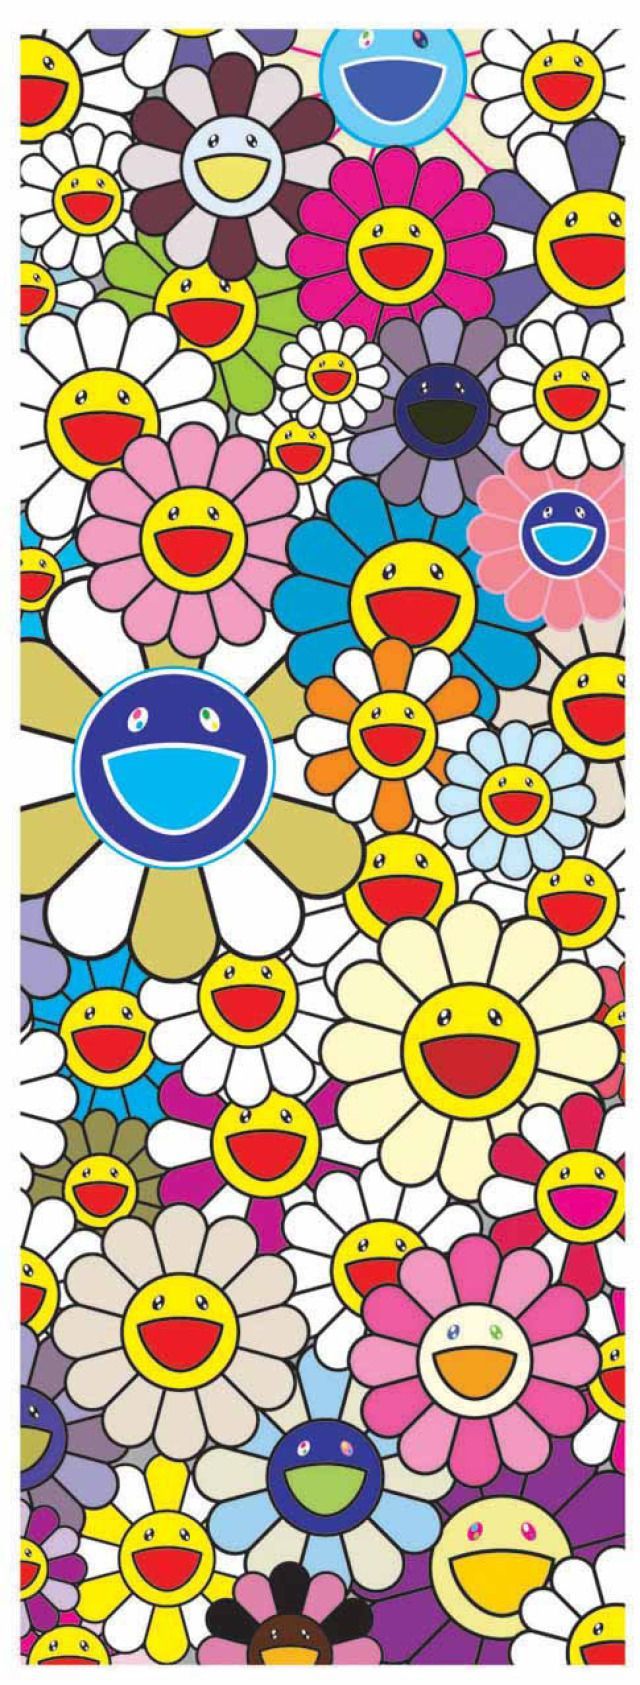 Murakami Takashi Sunflower Wallpapers On Wallpaperdog